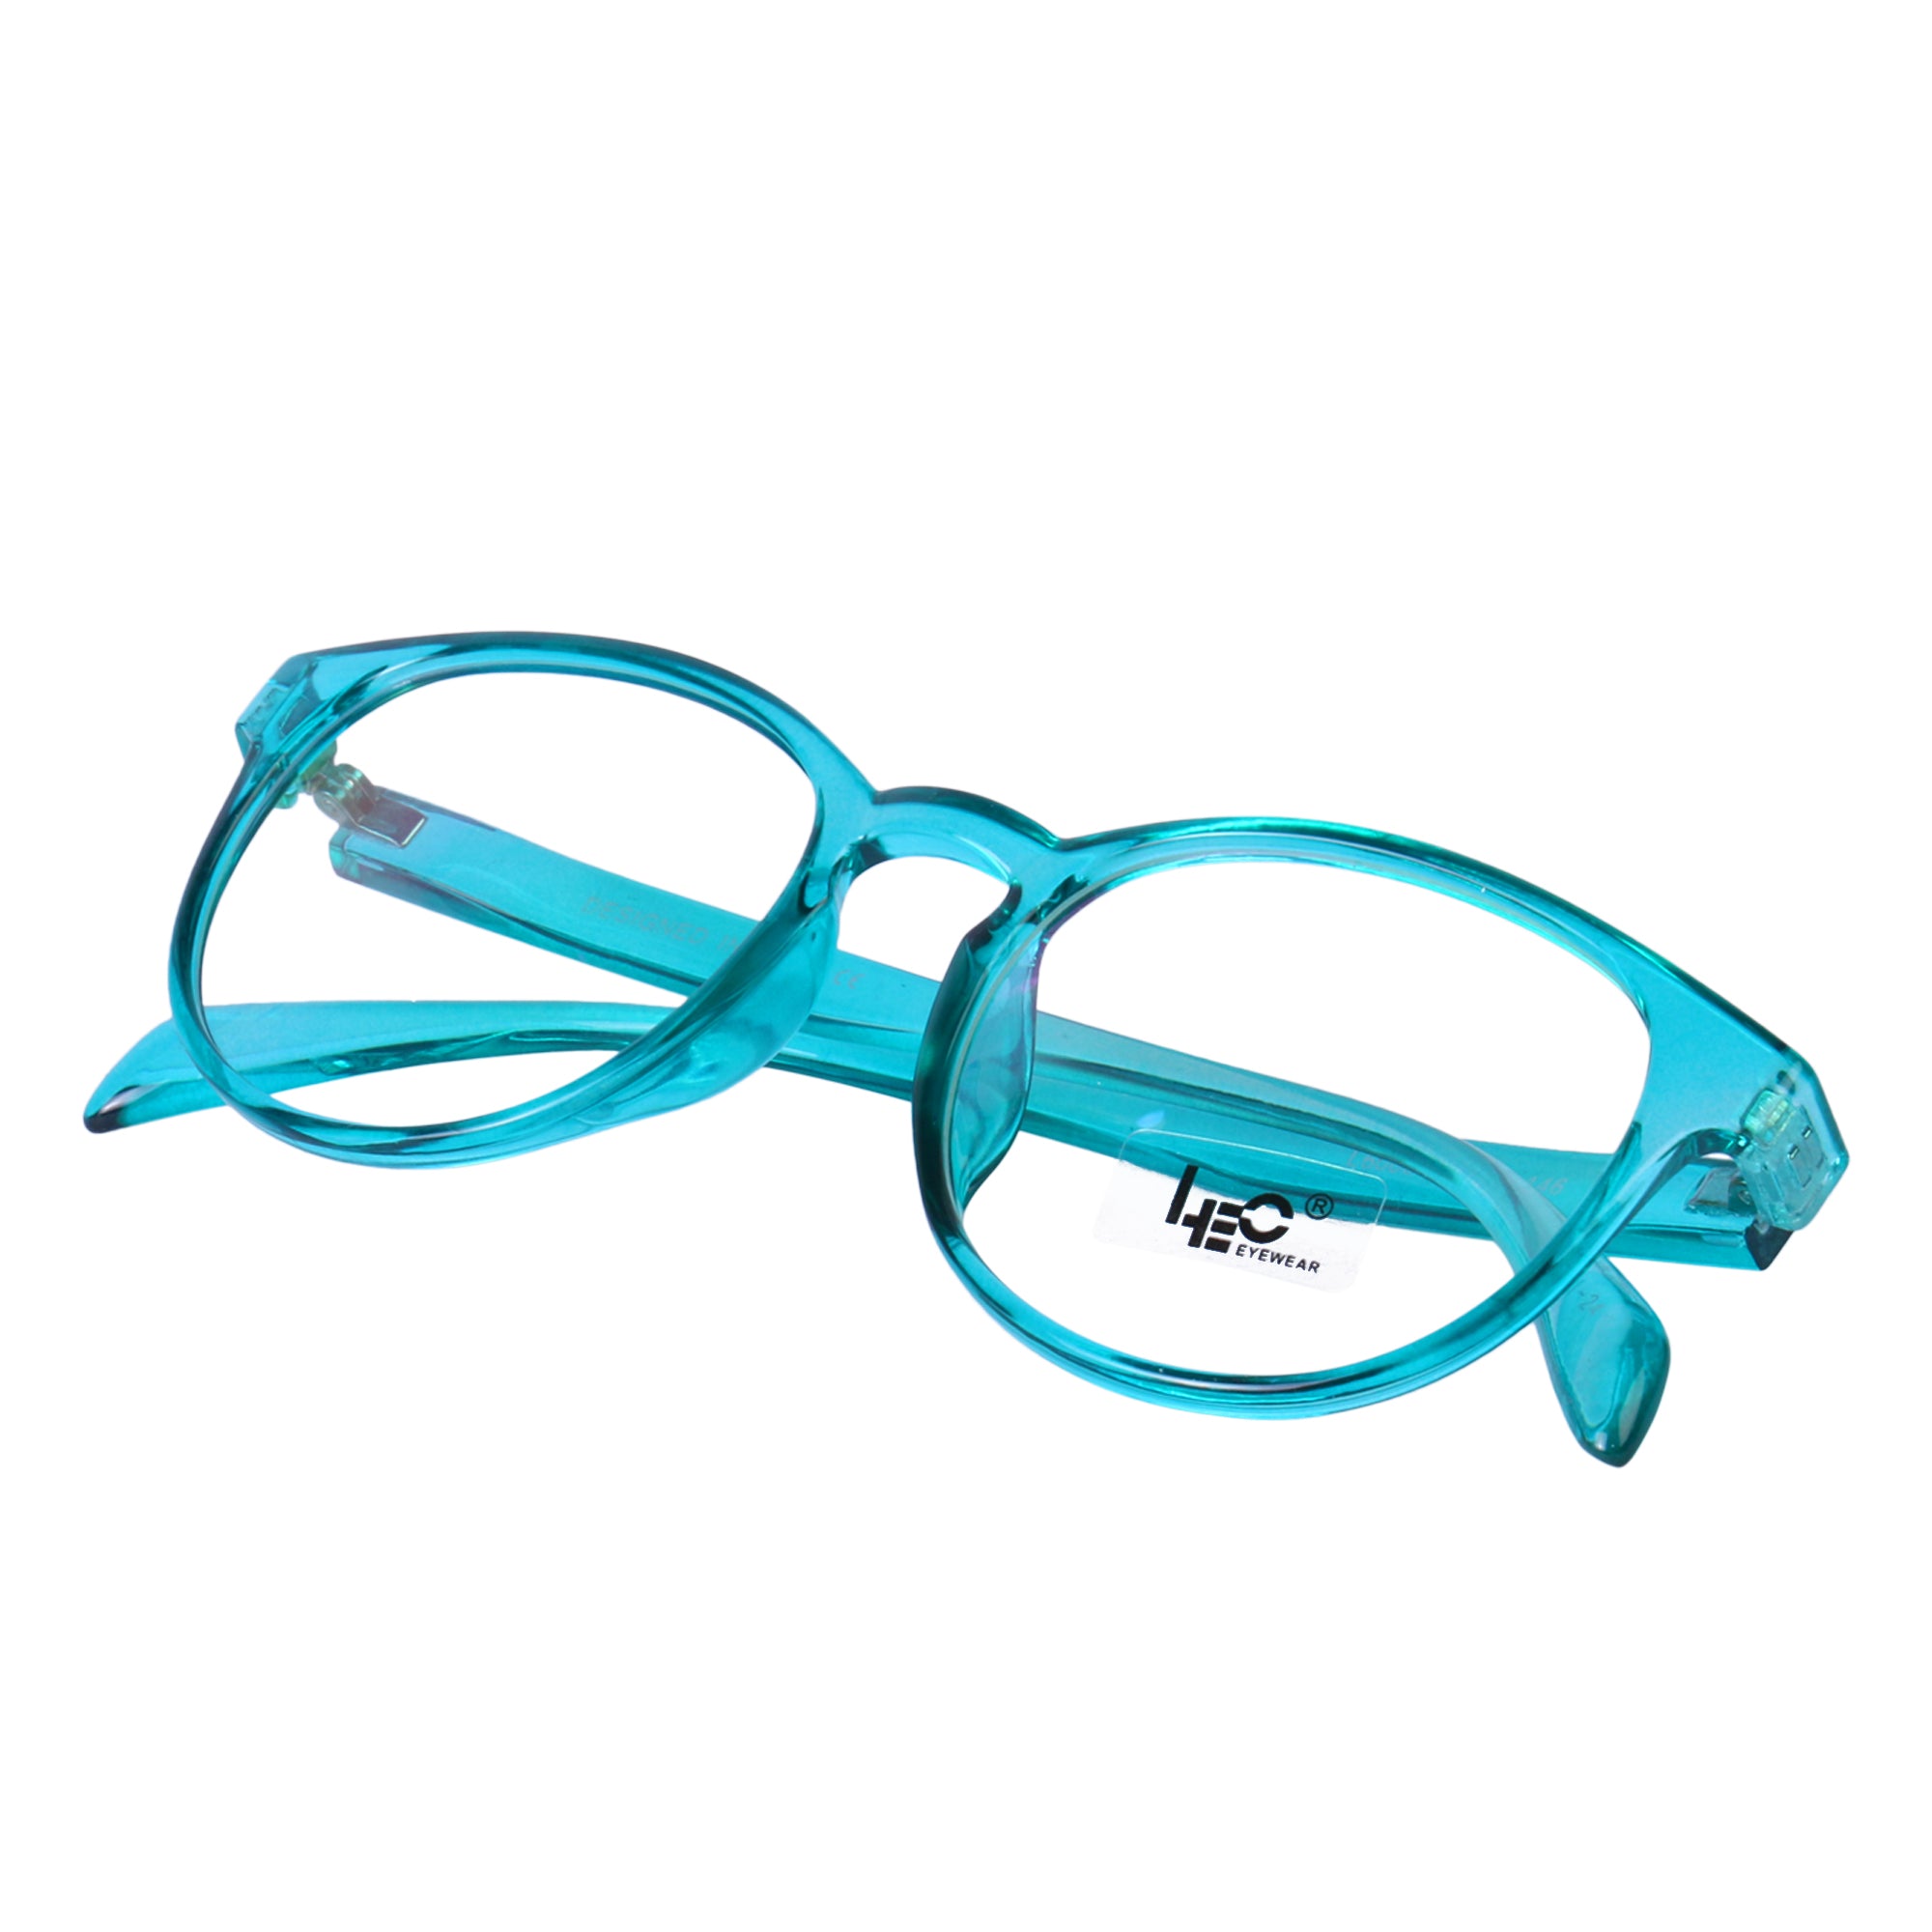 Green & Transparent Round Eyeglasses - L6006 C1-23